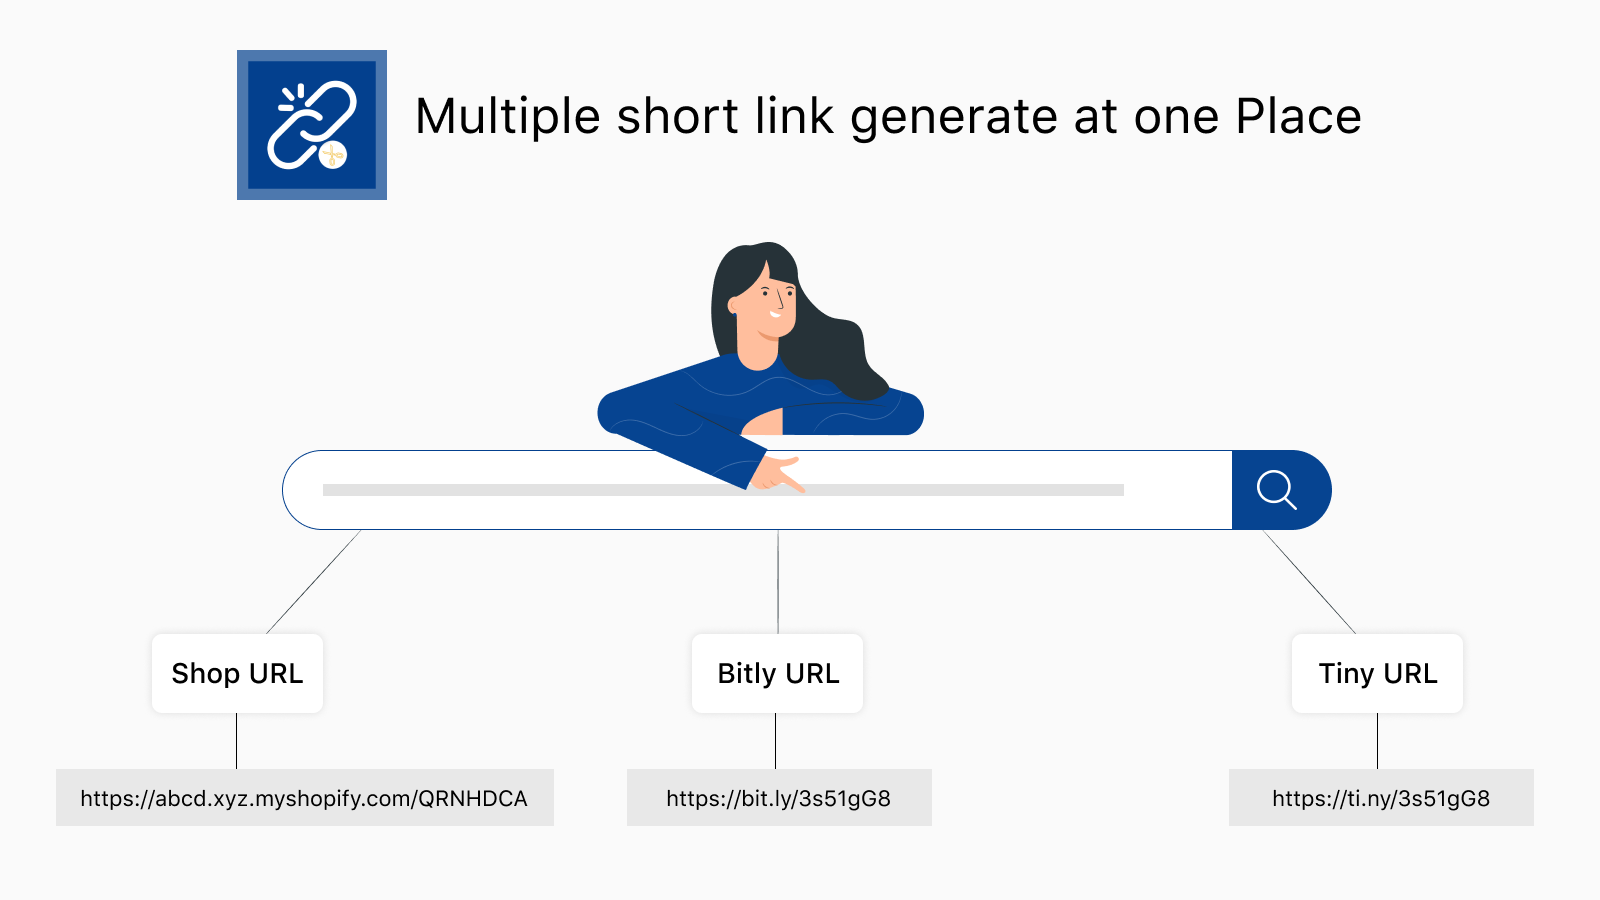 URL Short Link Generator